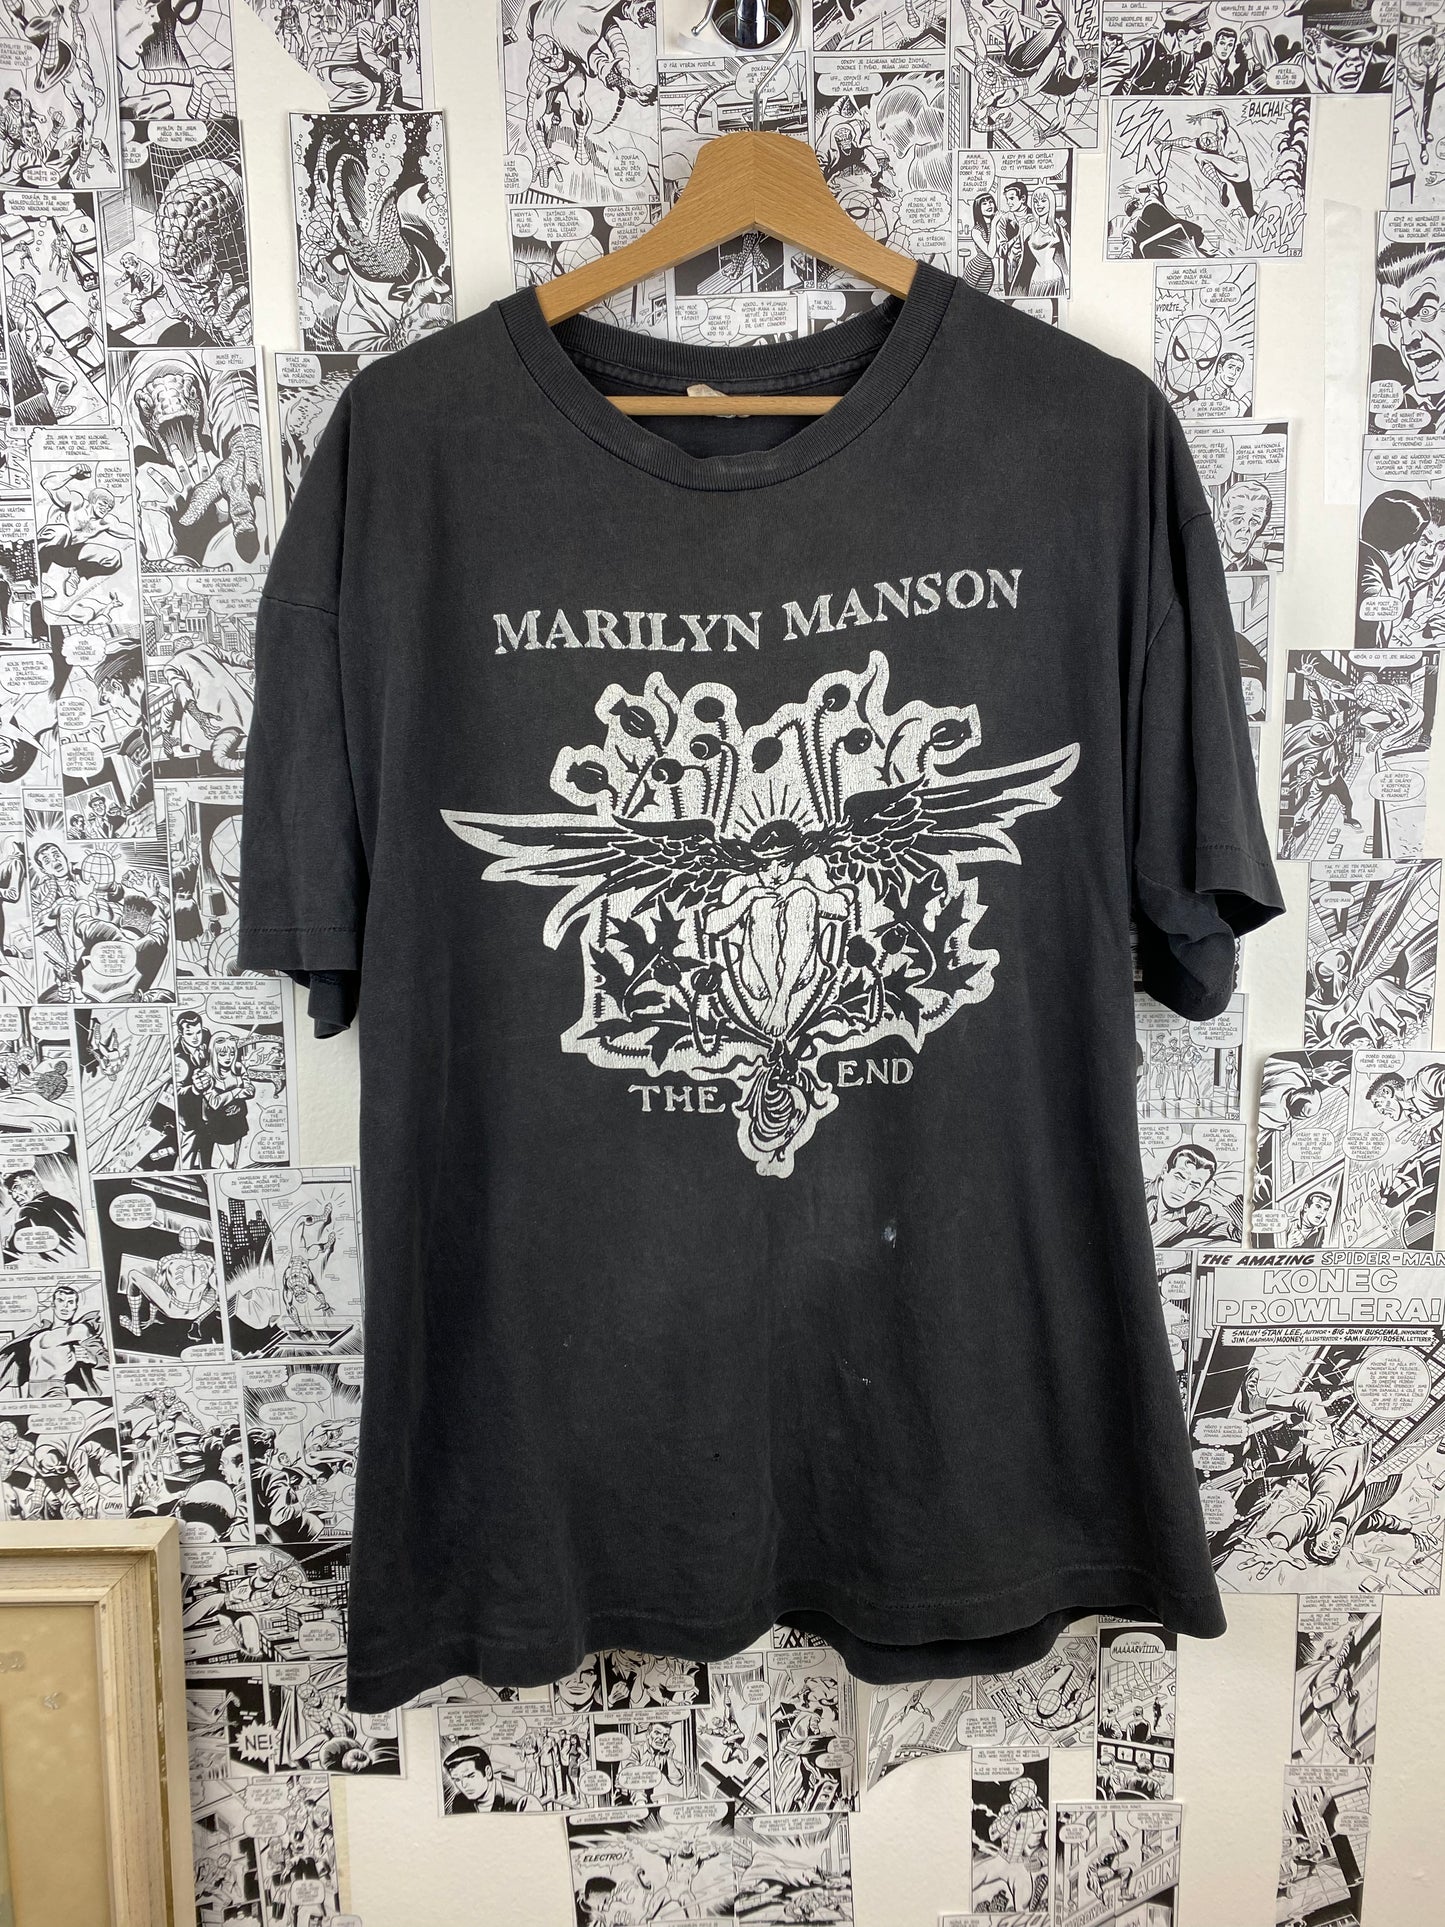 Vintage Marilyn Manson “Antichrist - The End” 1996 t-shirt - size XL